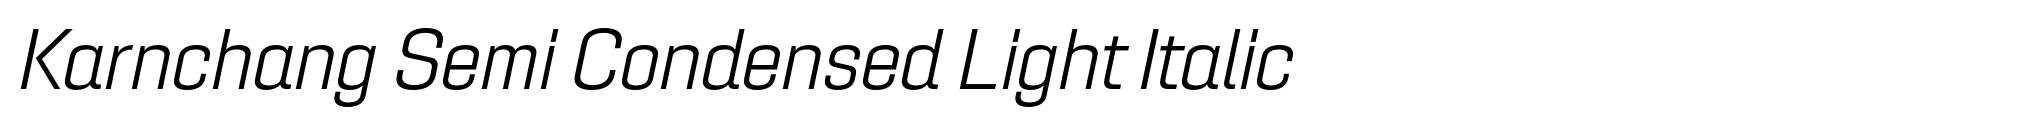 Karnchang Semi Condensed Light Italic image